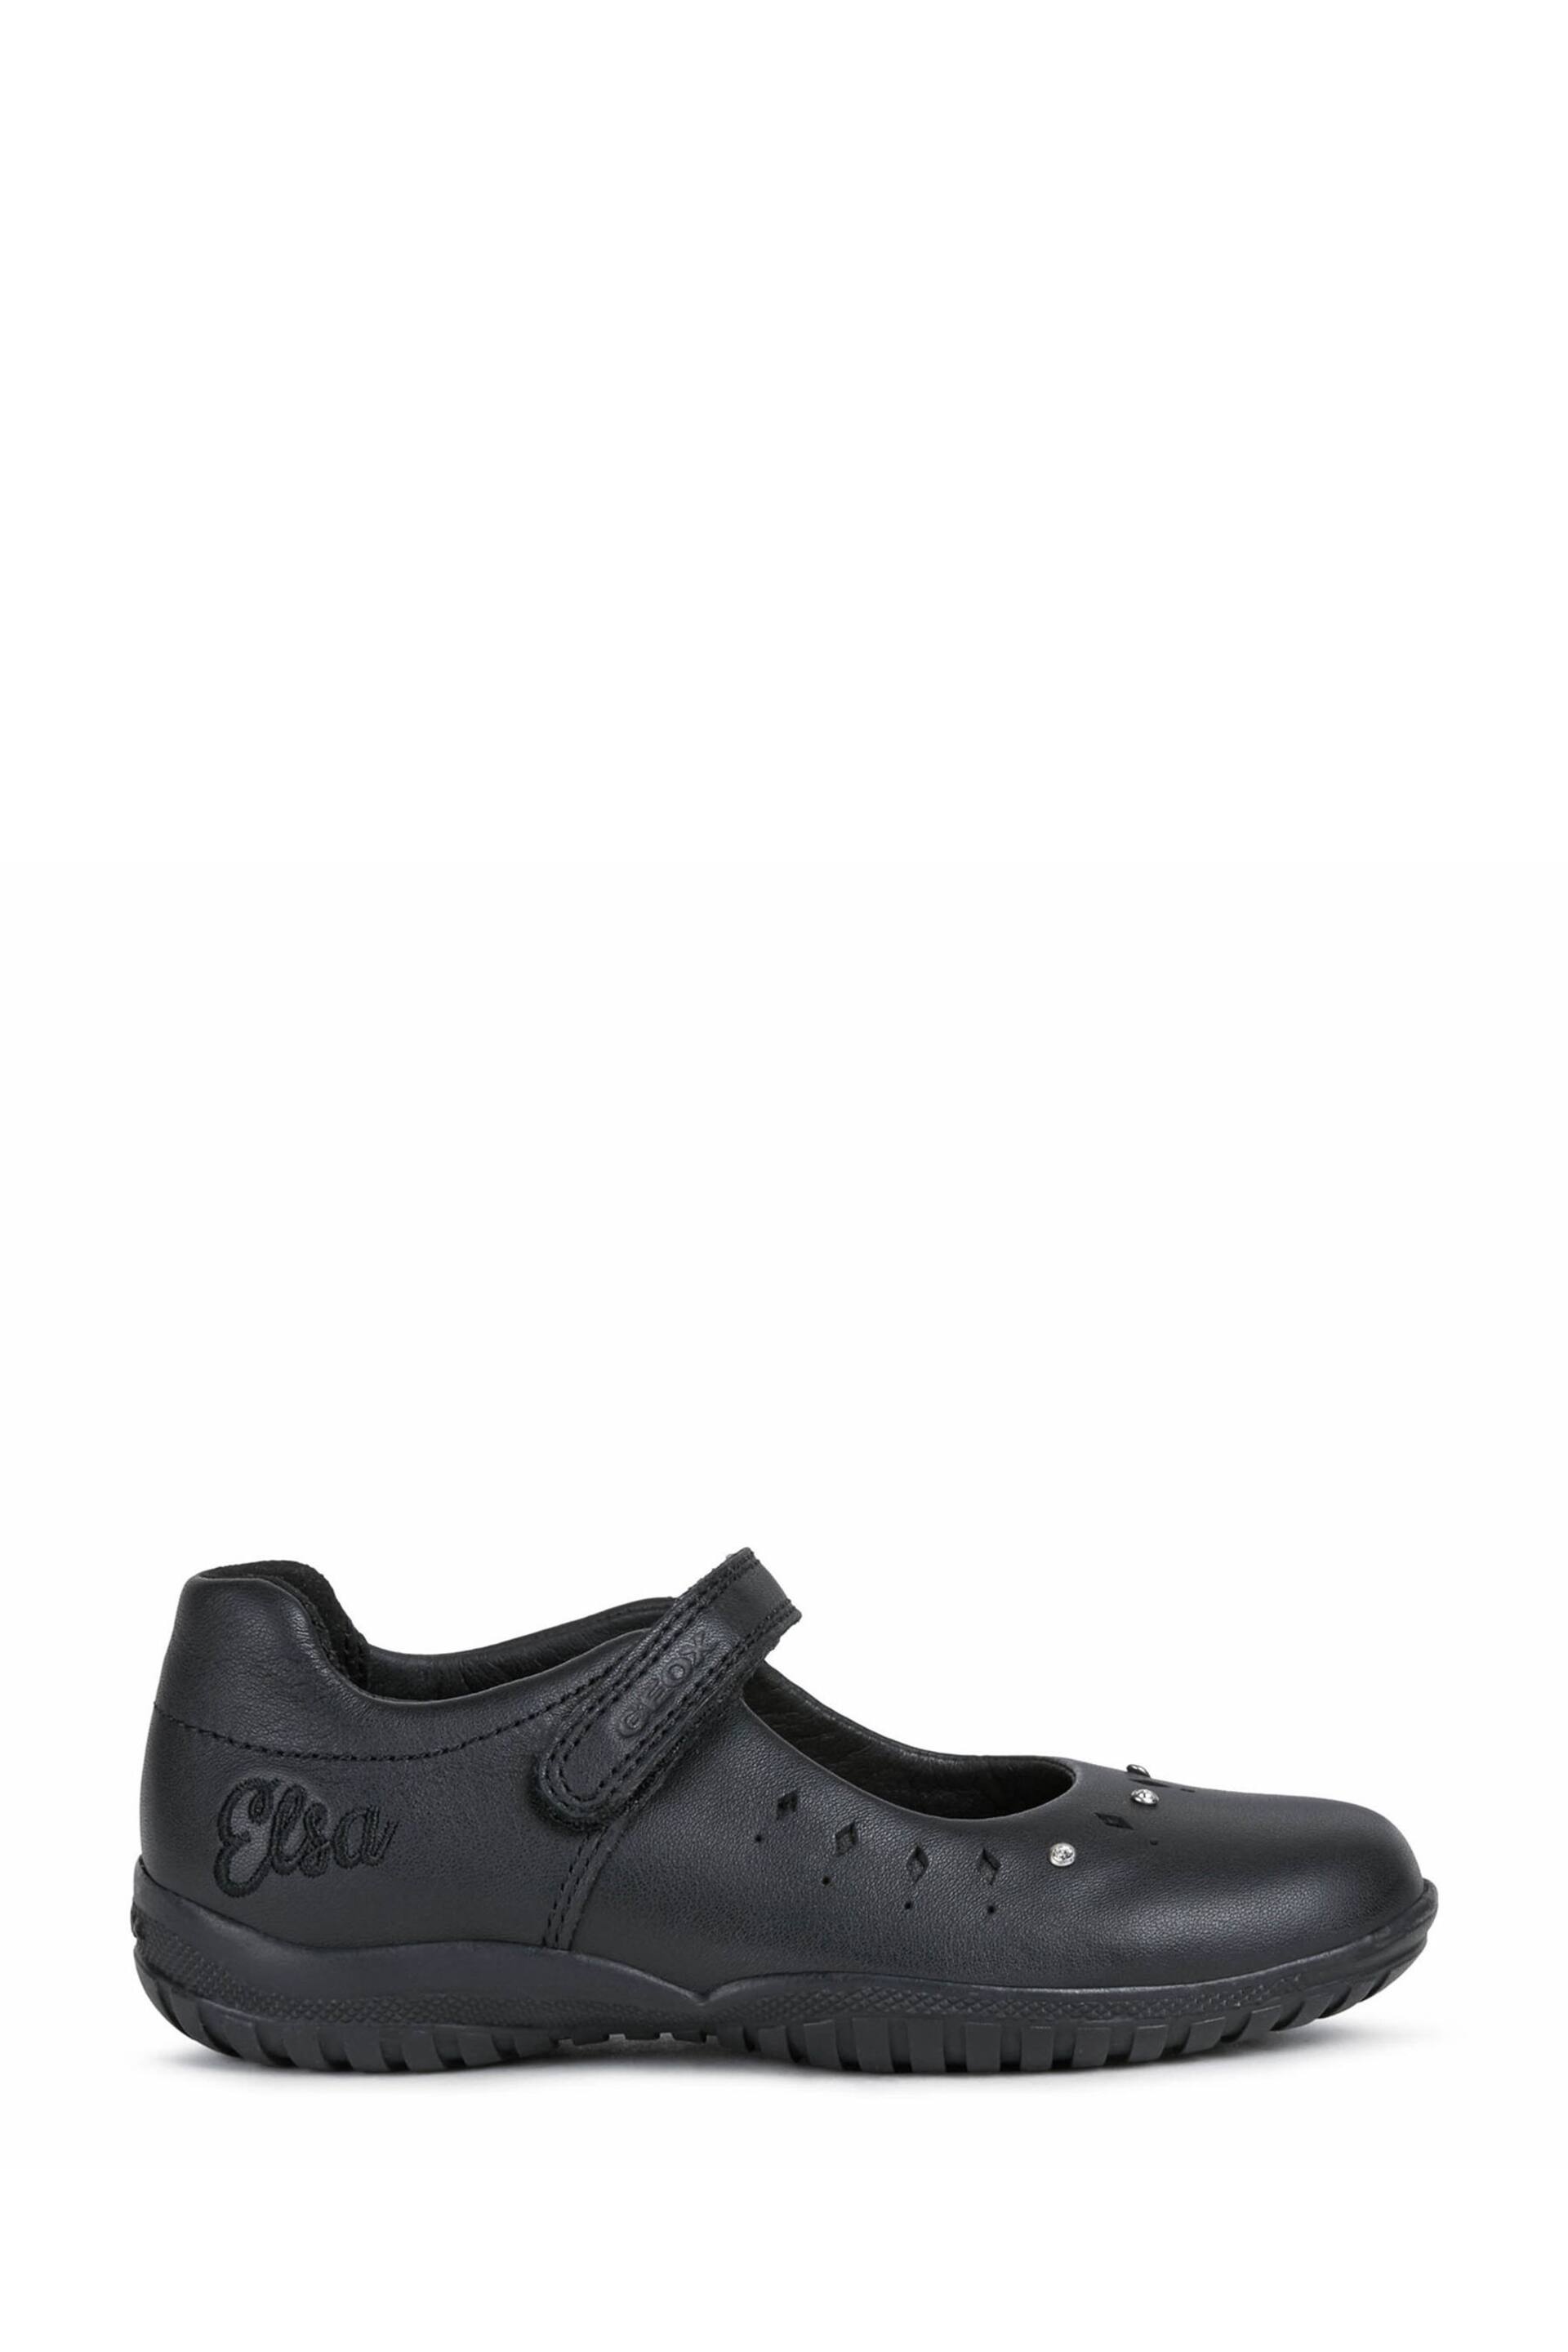 Geox Black  Jr Shadow B Shoes - Image 1 of 5